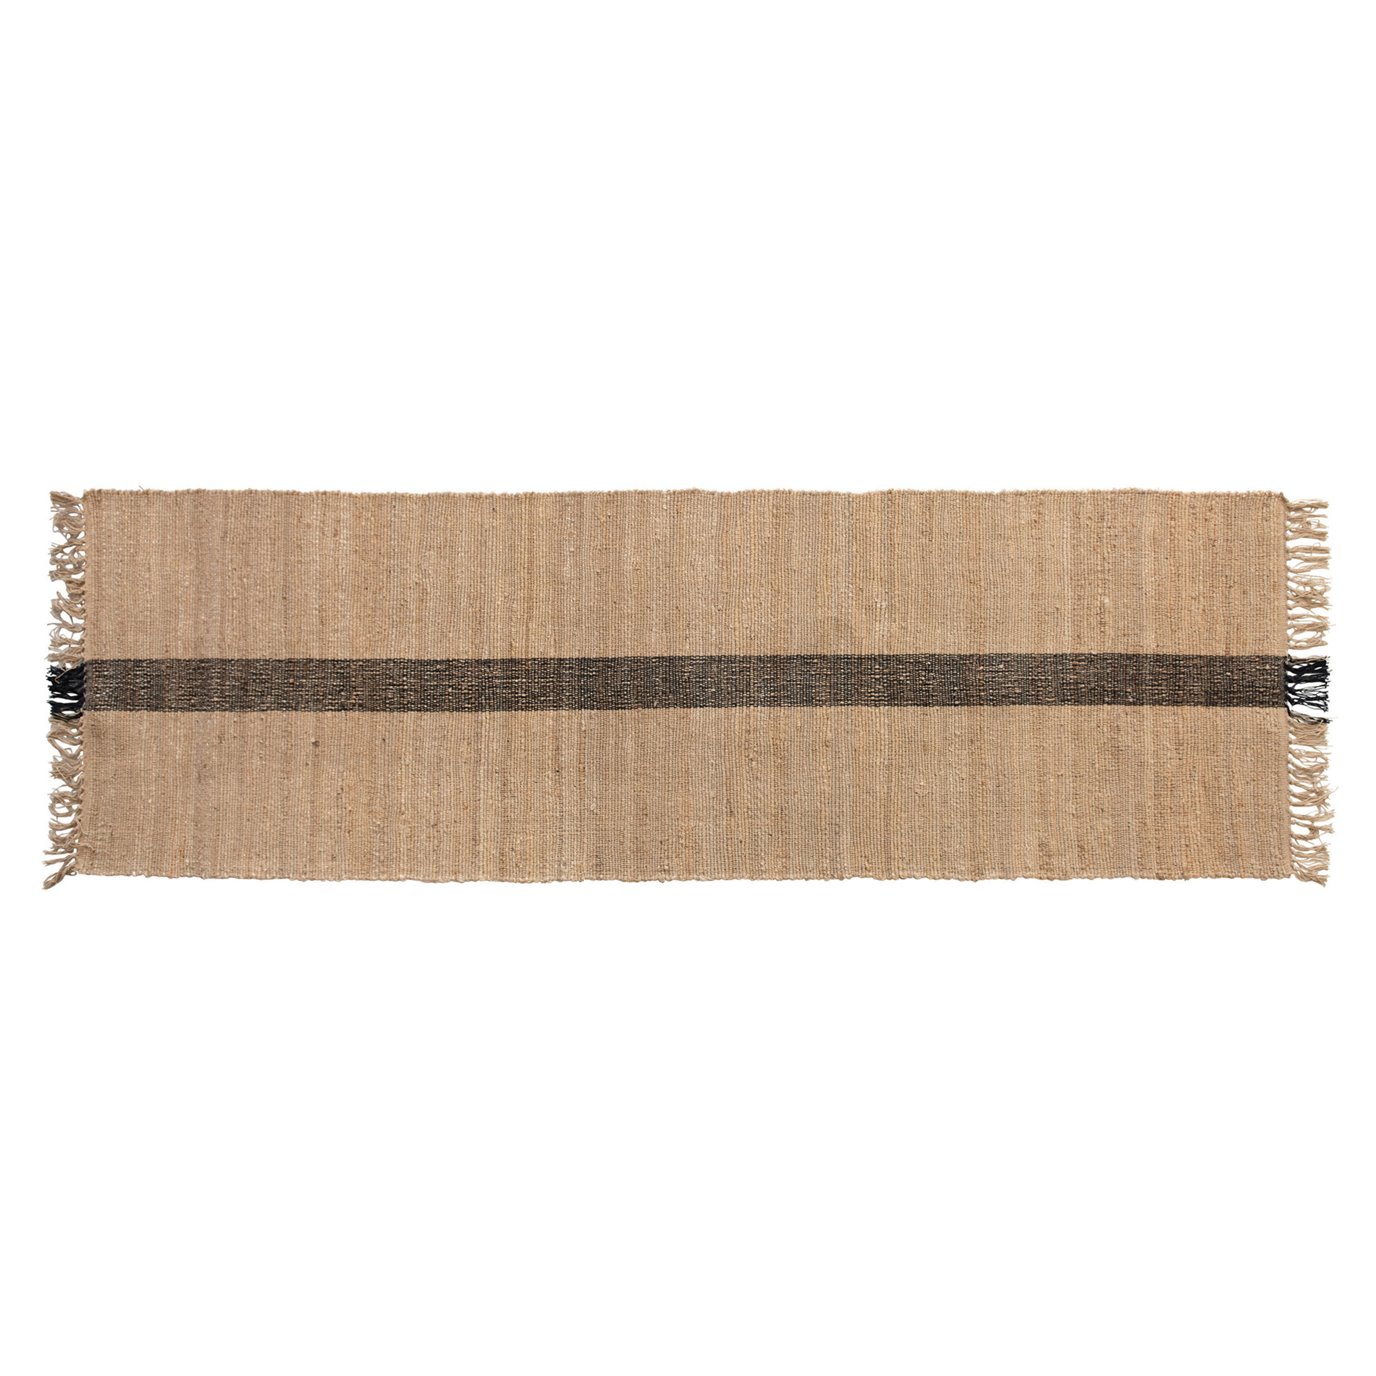 Jute & Cotton Floor Runner with Black Woven Stripe, Natural